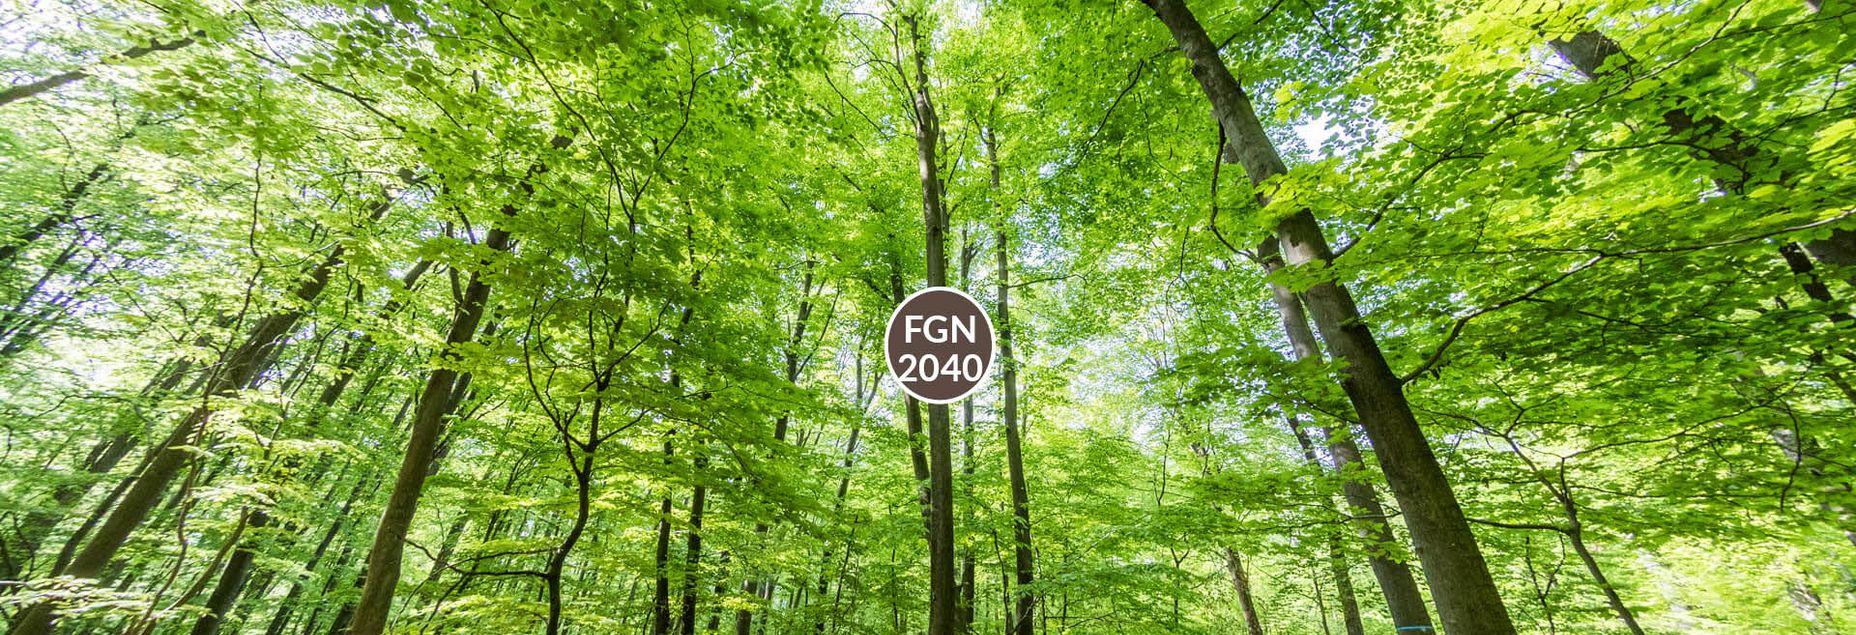 Baum FGN 2040 - Fisheyeperspektive